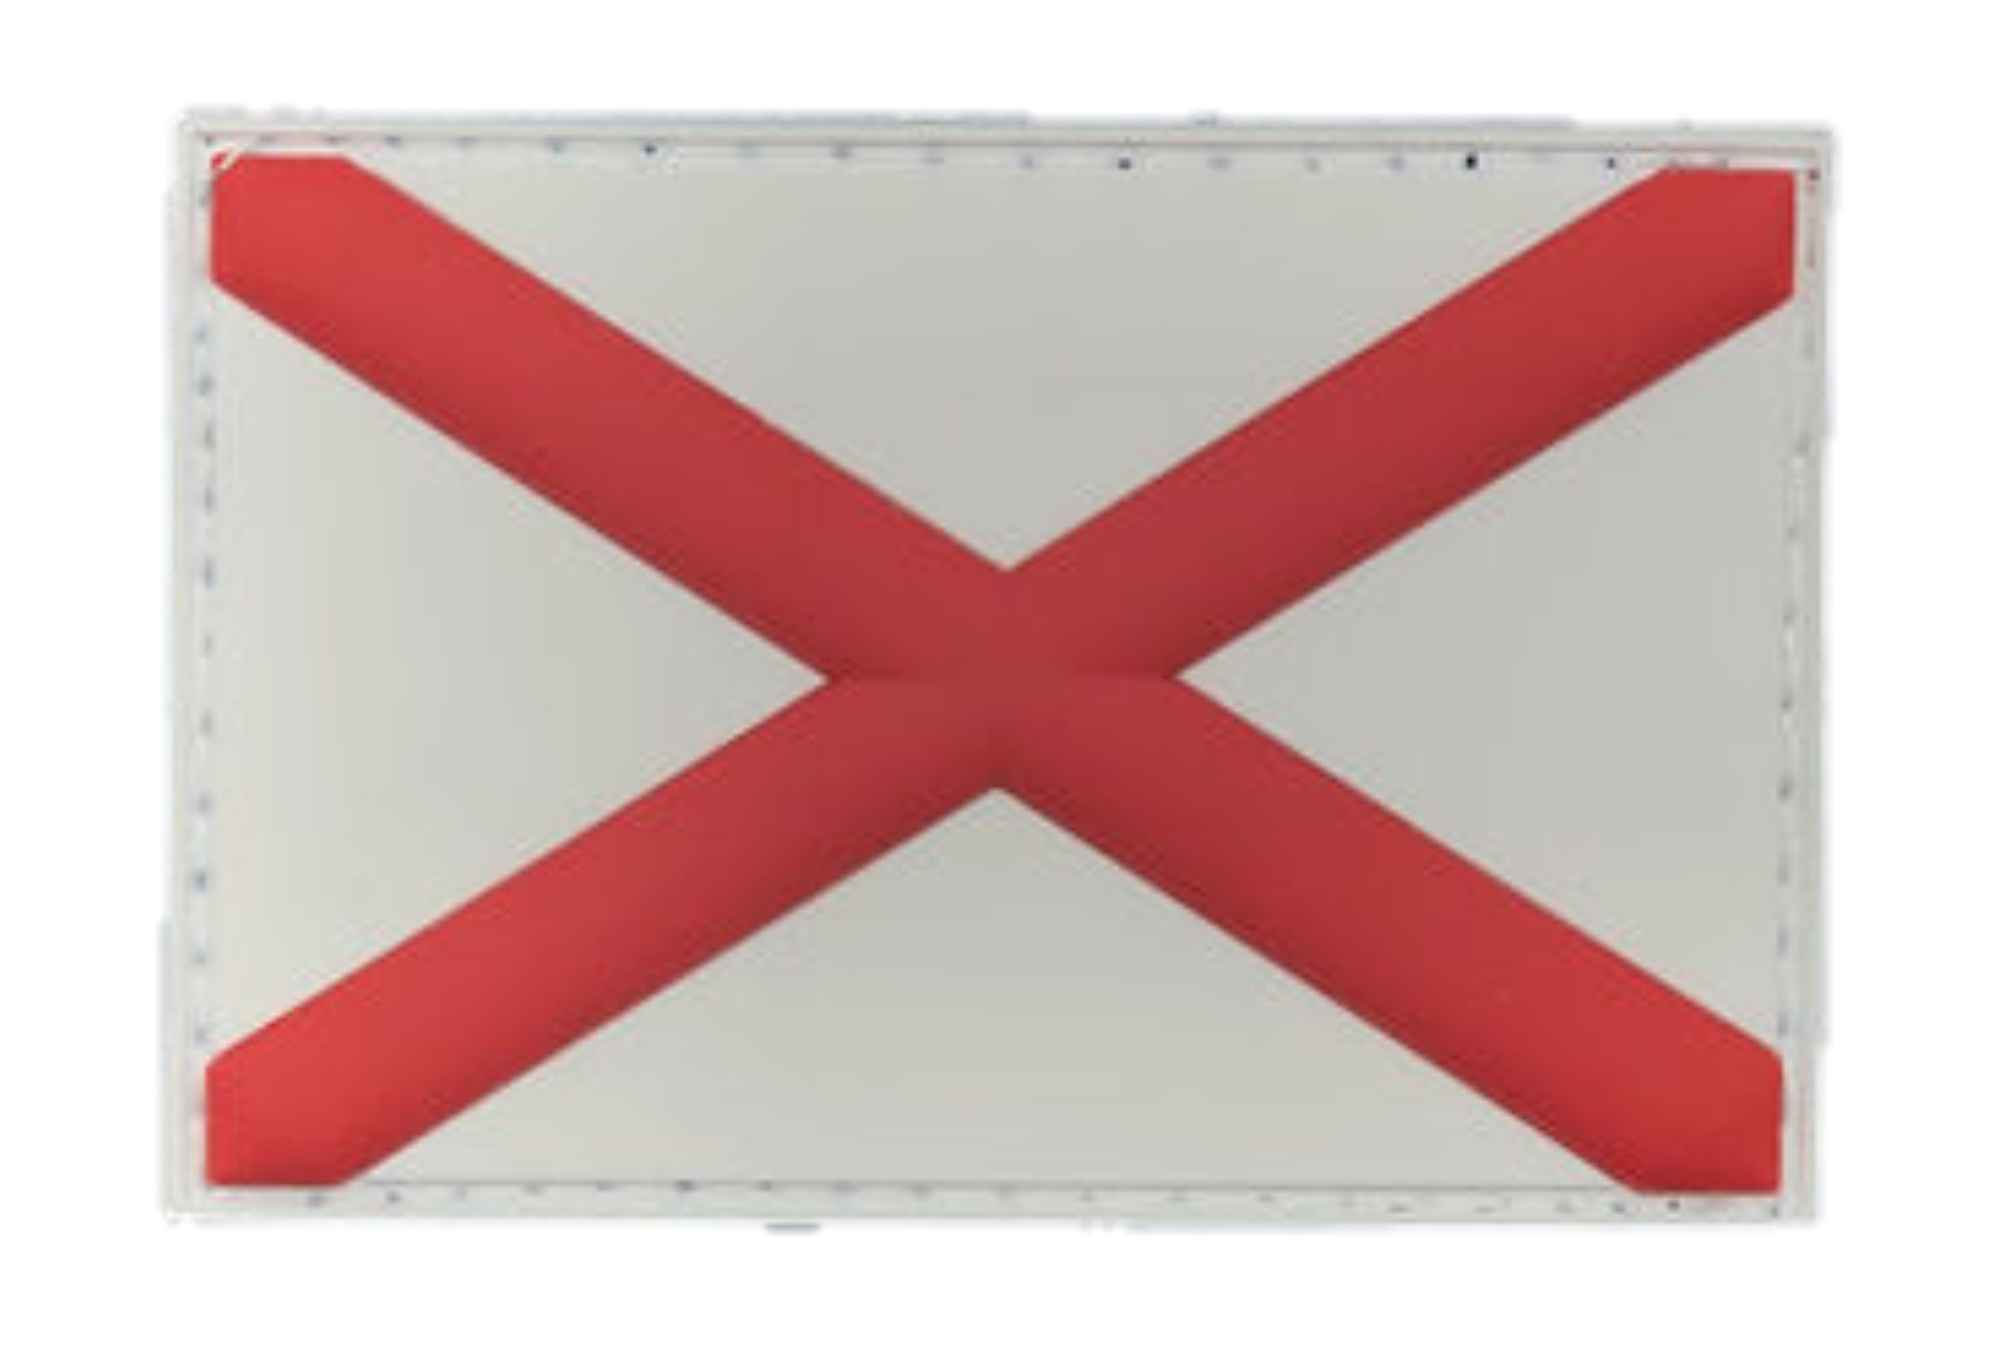 Alabama Flag Patch pvc with velcro